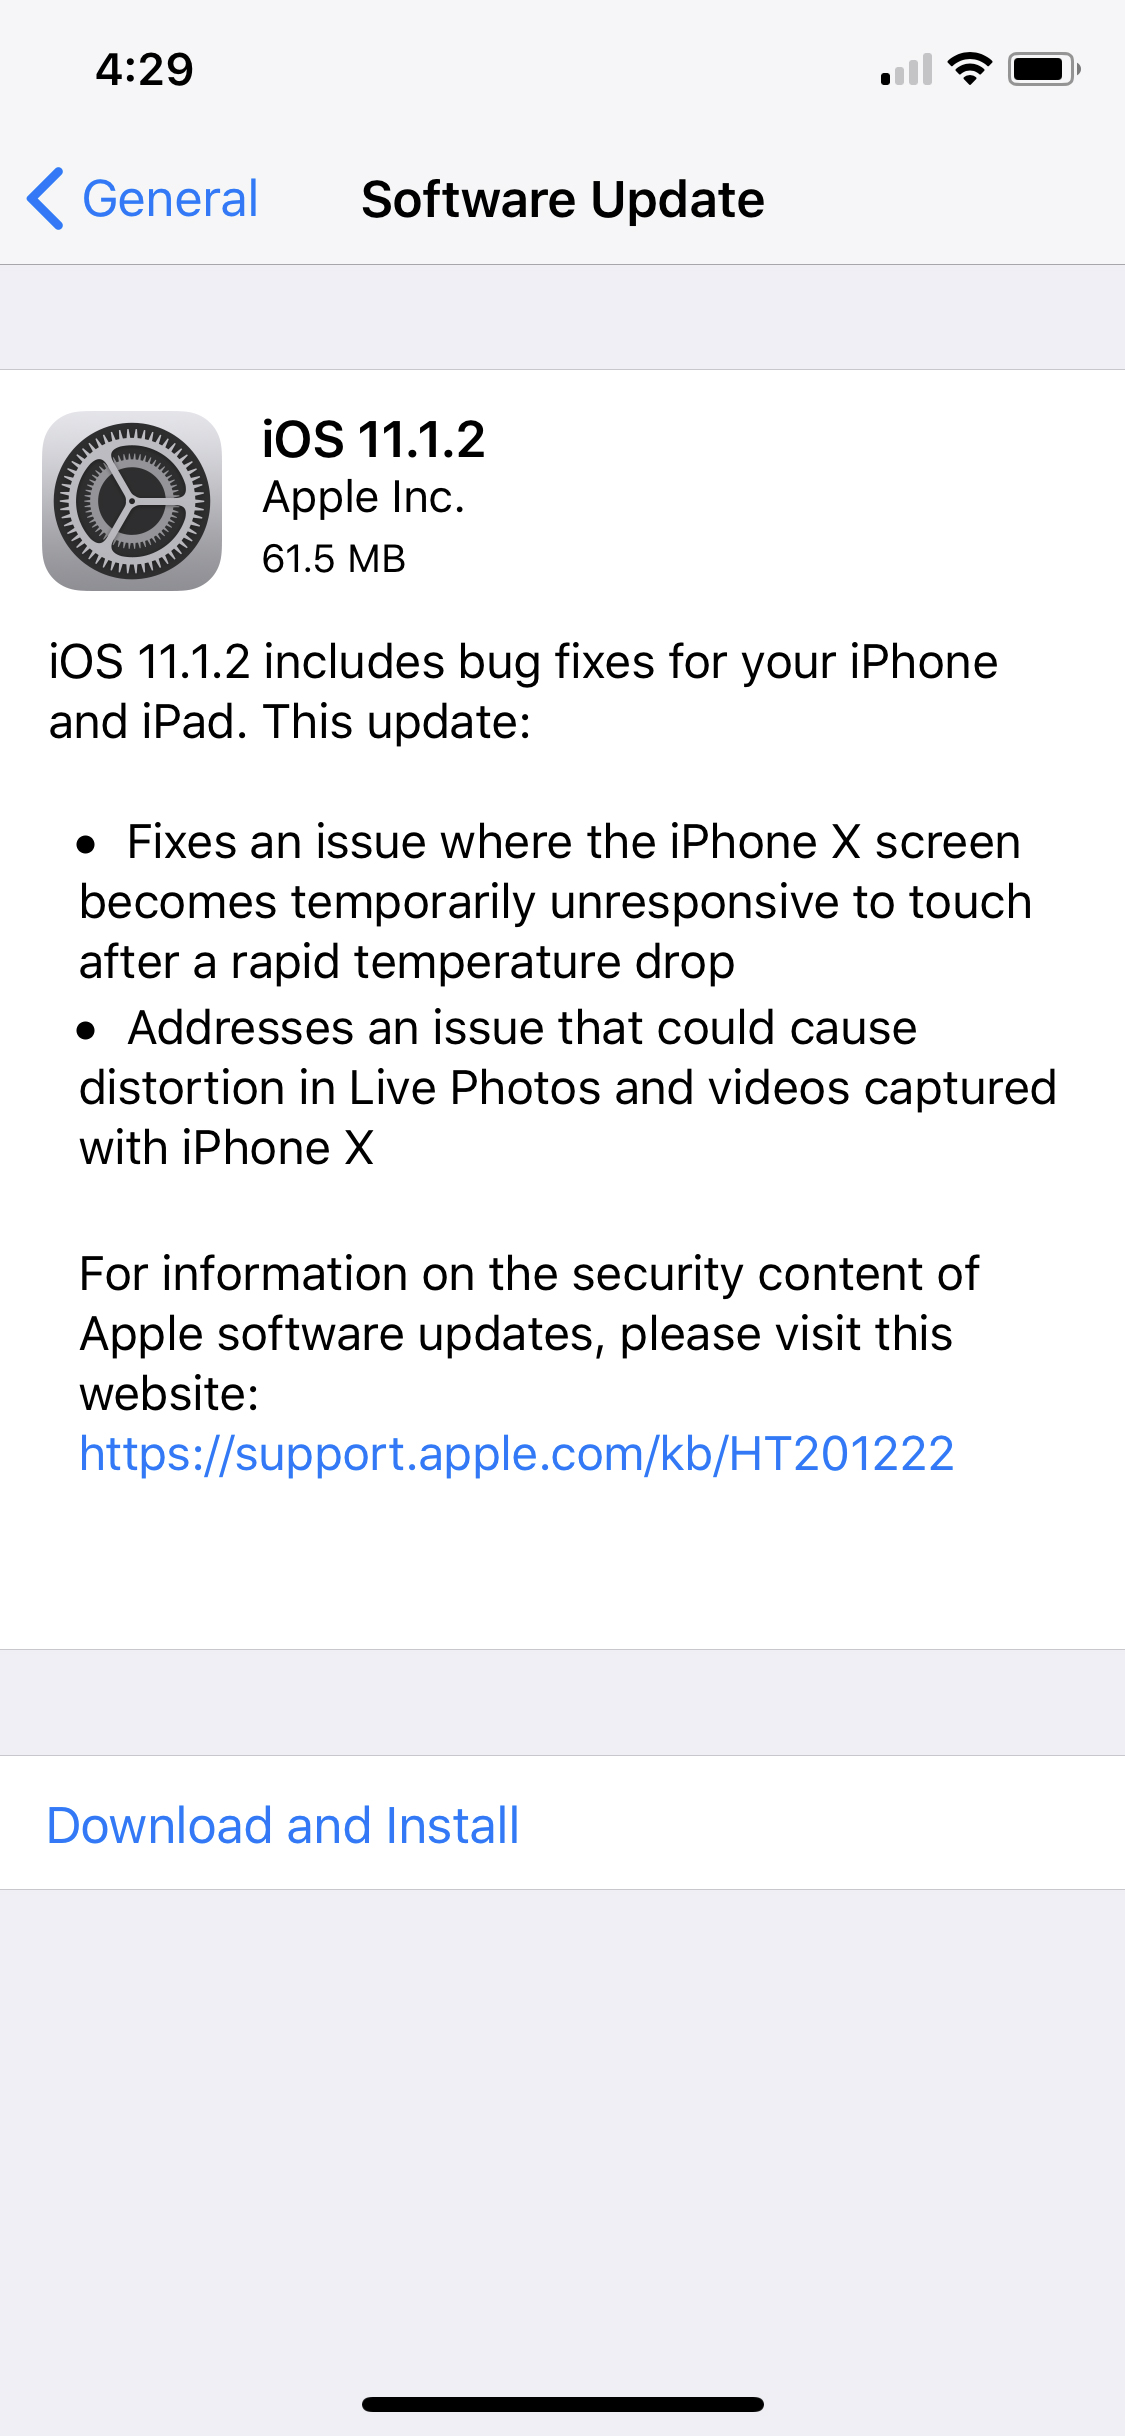 Apple Releases iOS 11.1.2, Fixes Unresponsive iPhone X Display After Rapid Temperature Drop [Download]